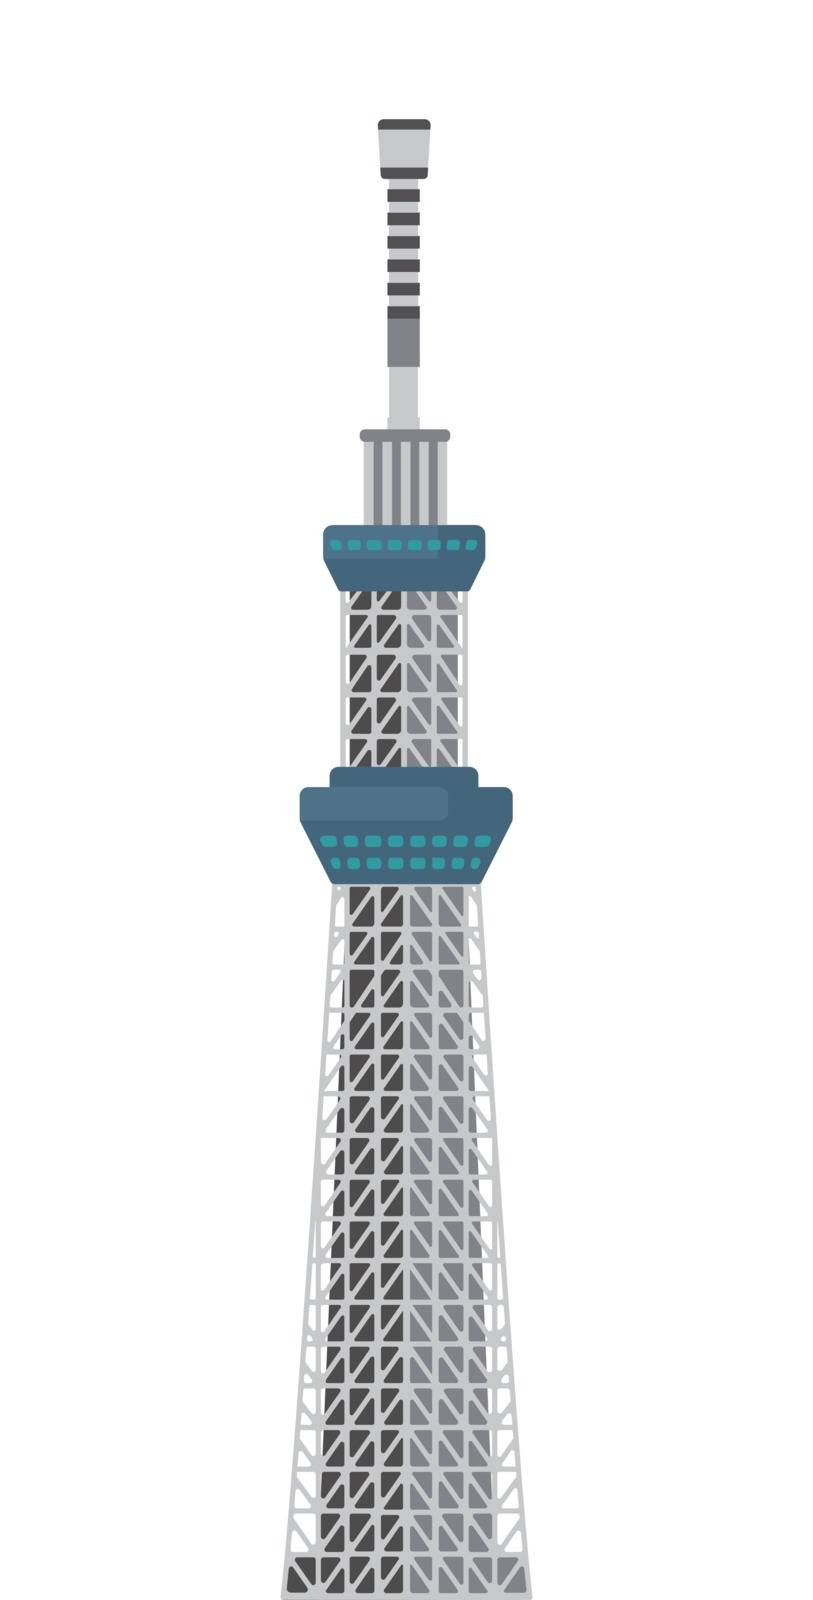 Tokyo sky tree / Tokyo landmark building illustration by barks